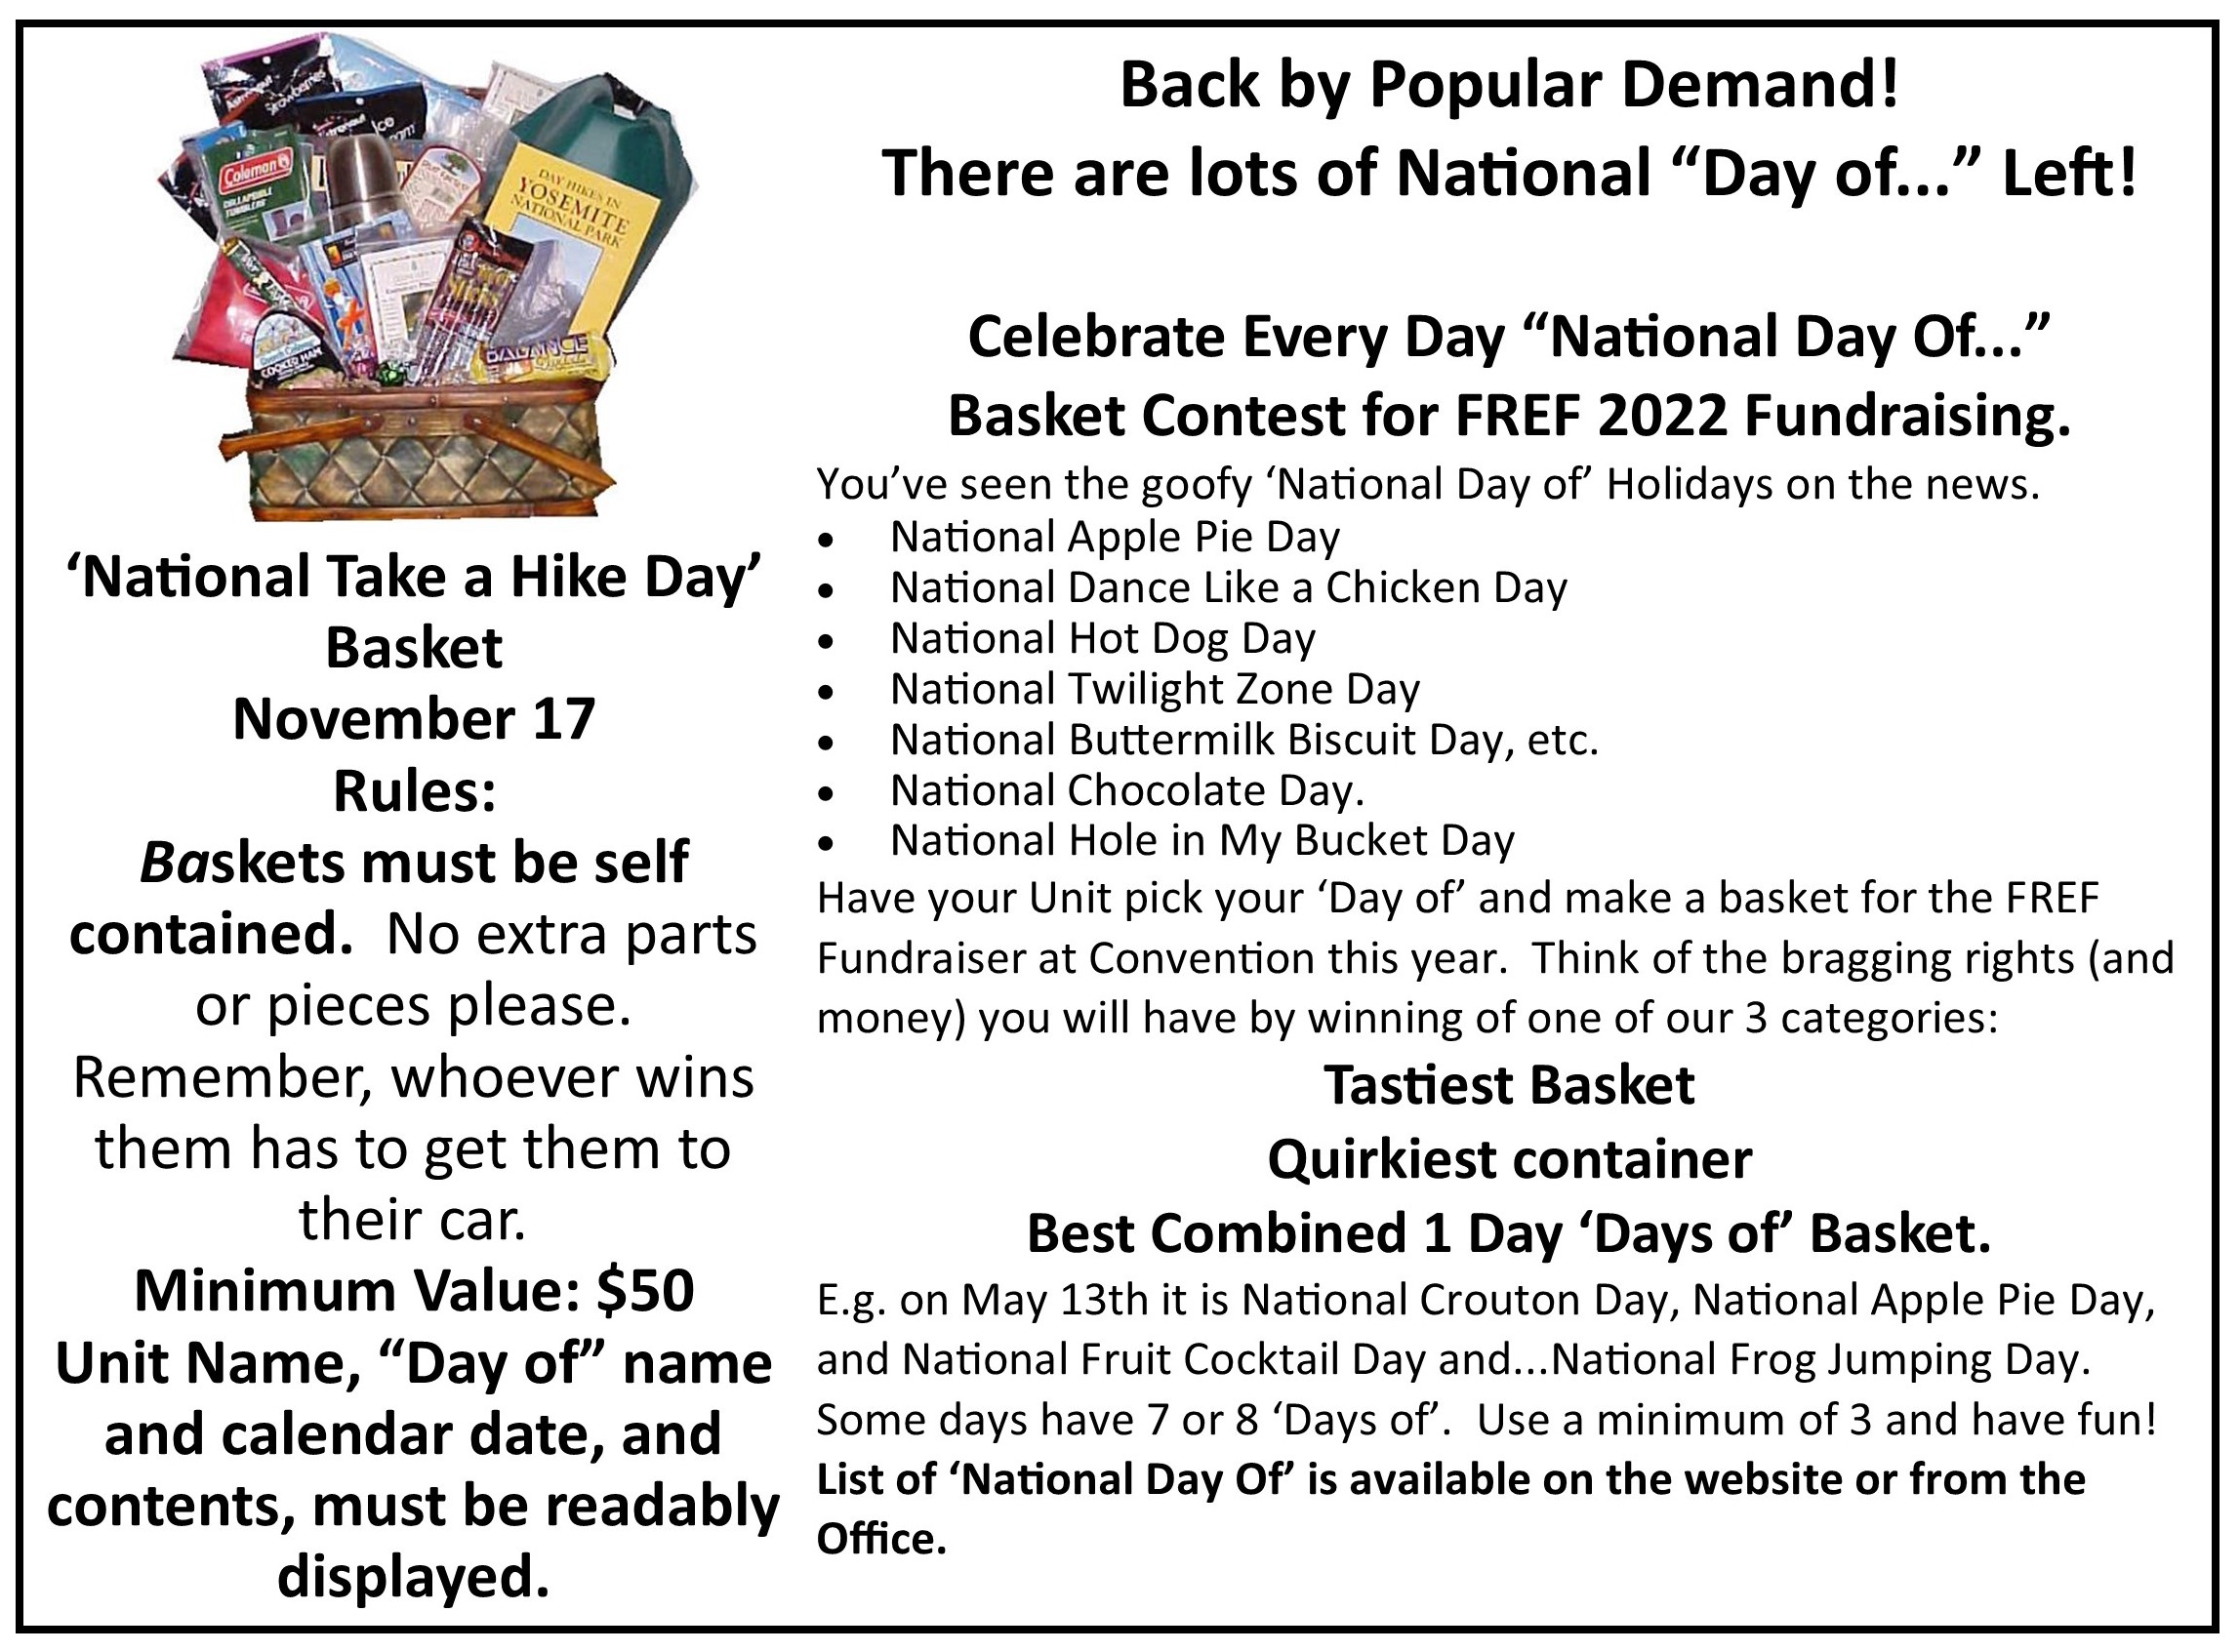 National Day of Basket Flyer